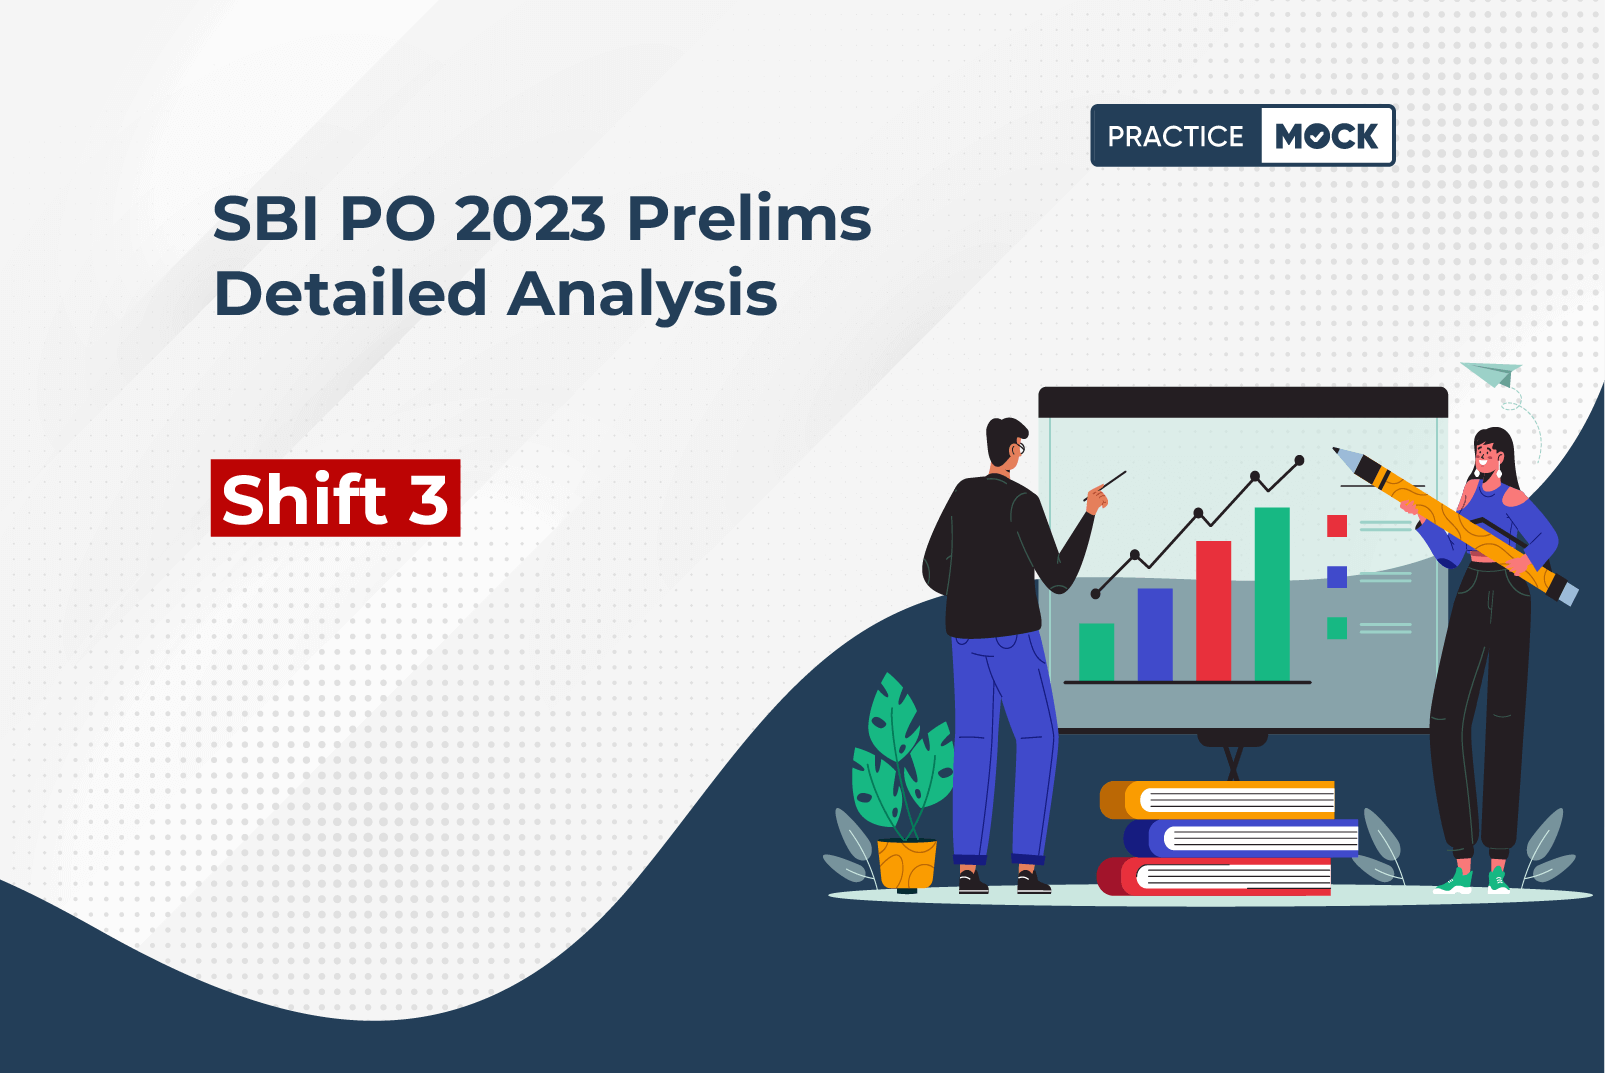 SBI PO 2023 Prelims Shift 3 Detailed Analysis (1)